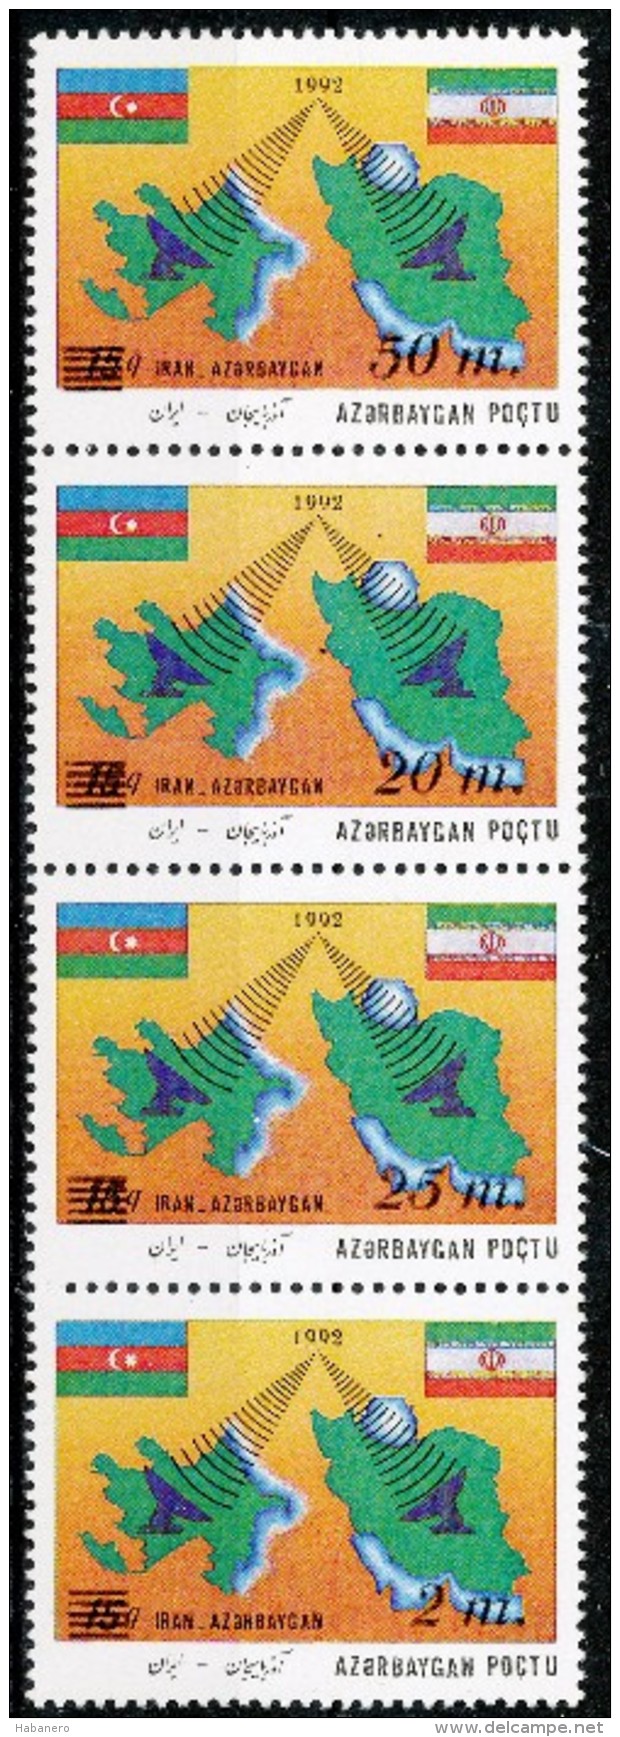 AZERBAIJAN - 1994 - Mi 118-121Zd - SE-TENANT STIP OF 4 TYPE III B - MNH ** - Azerbaïjan